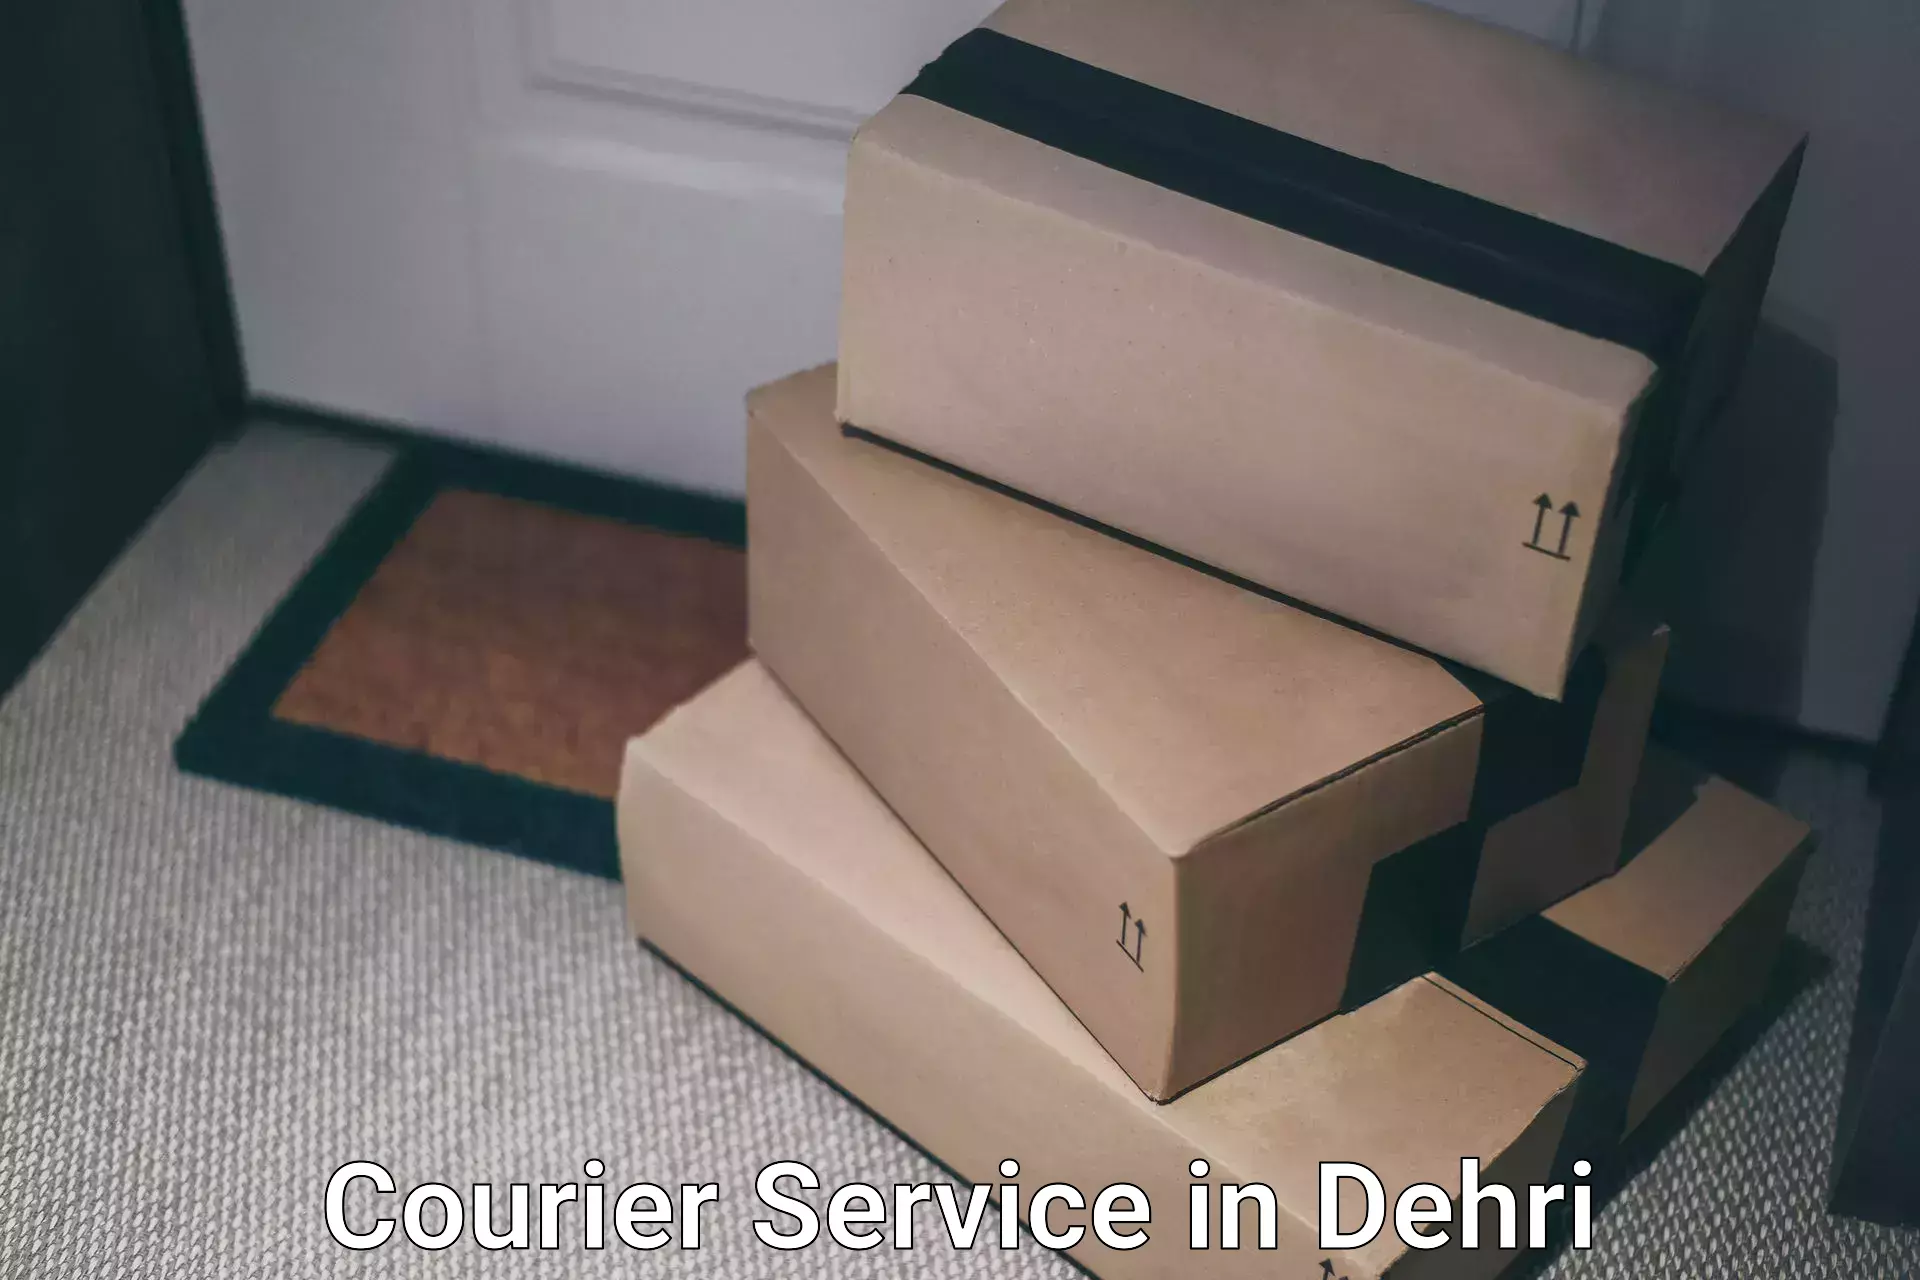 High-efficiency logistics in Dehri